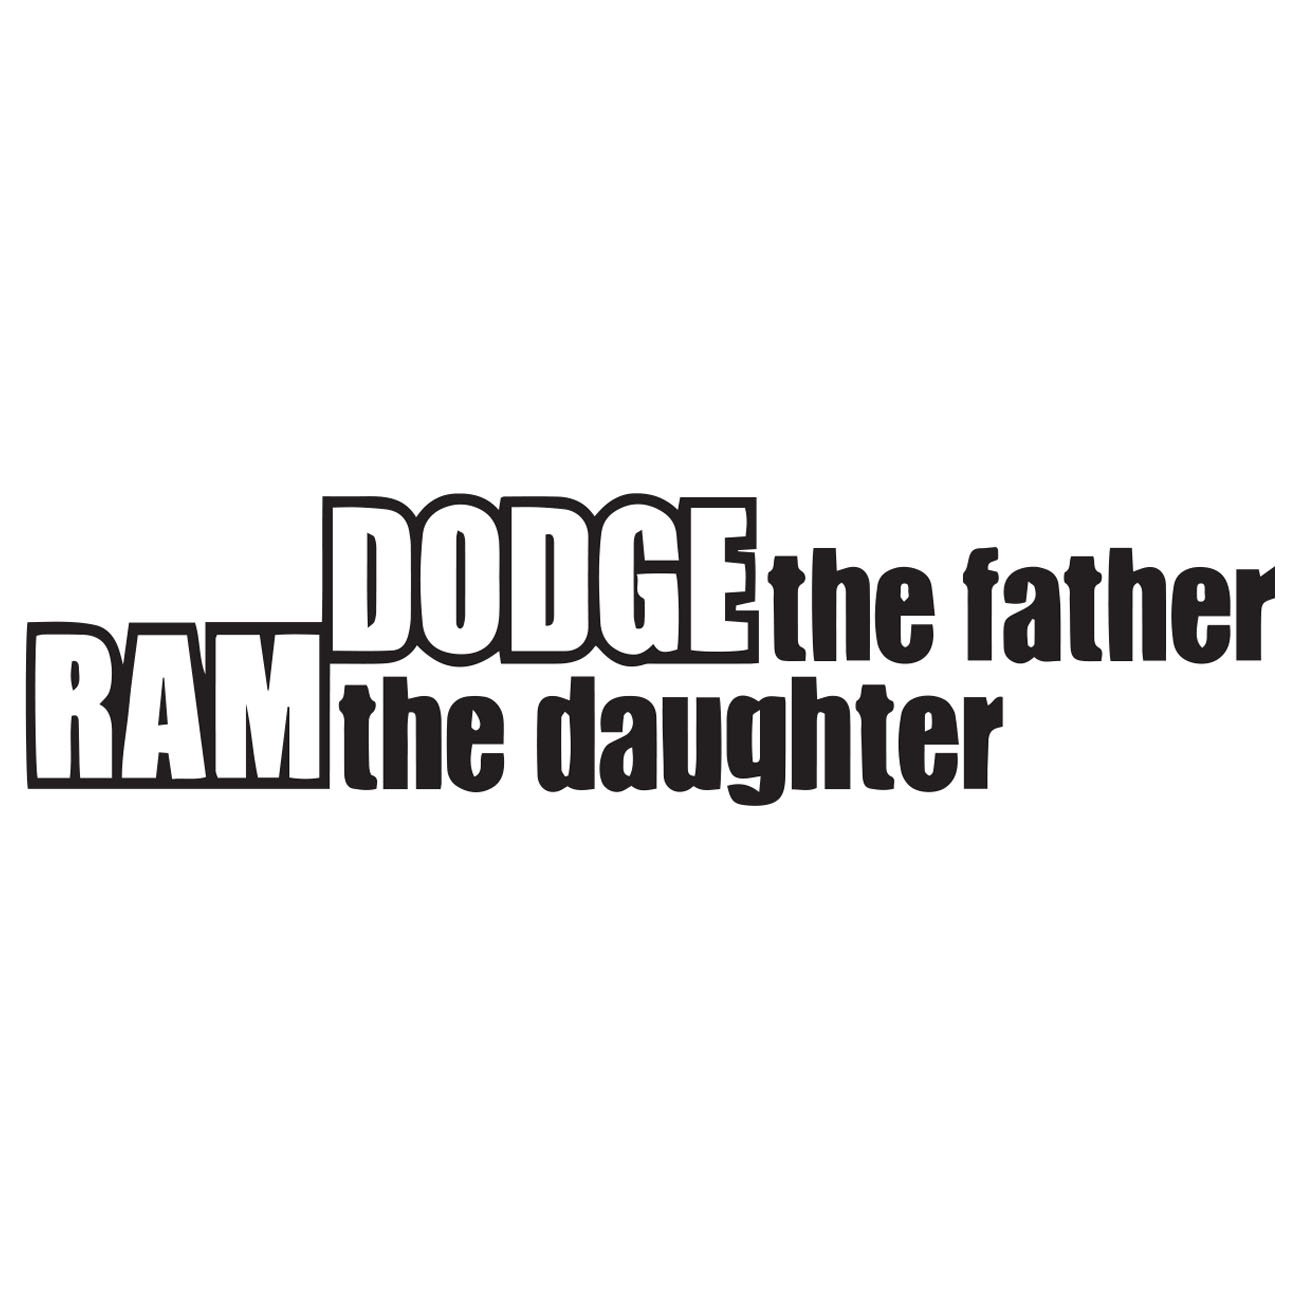 Dekal - Dodge the father